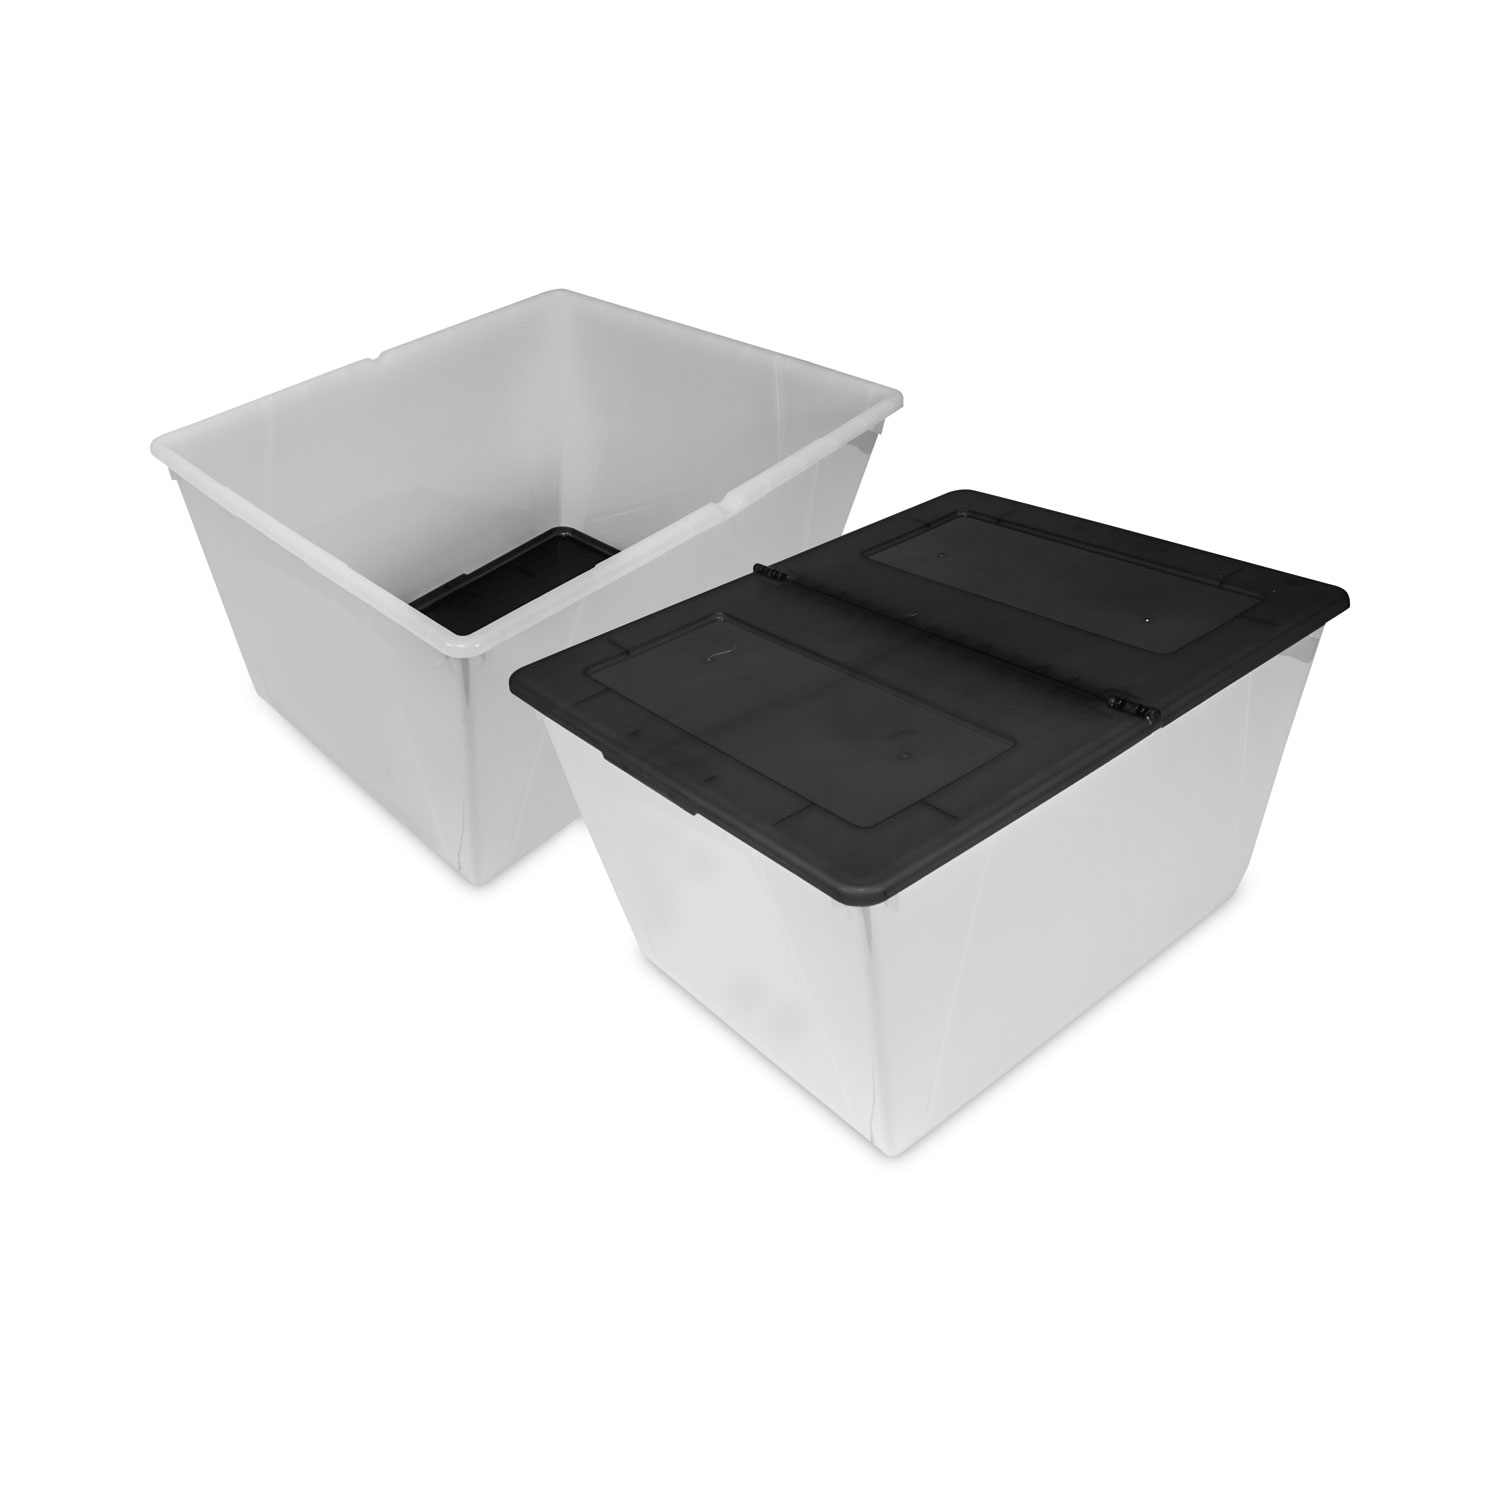 Roughneck Storage Box, 50 gal, 21.2 x 43 x 17.88, Dark Indigo Metallic -  Zerbee